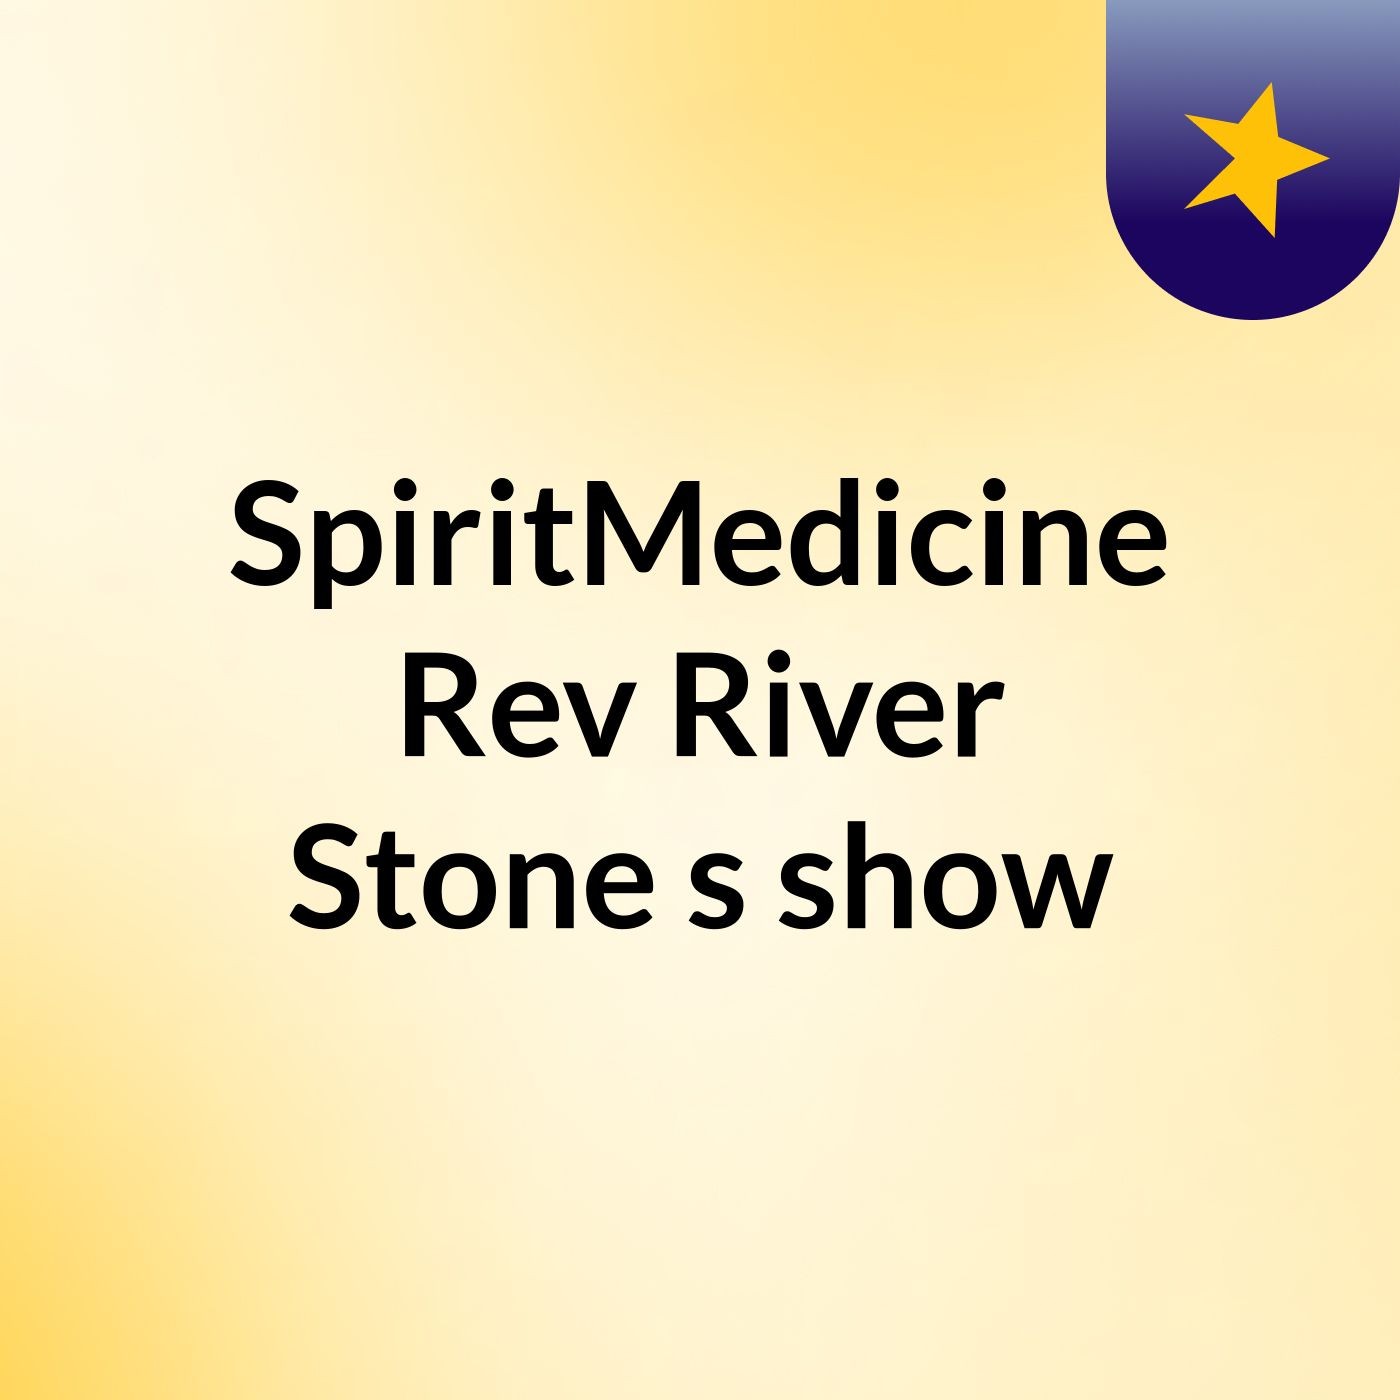 SpiritMedicine Rev River Stone's show